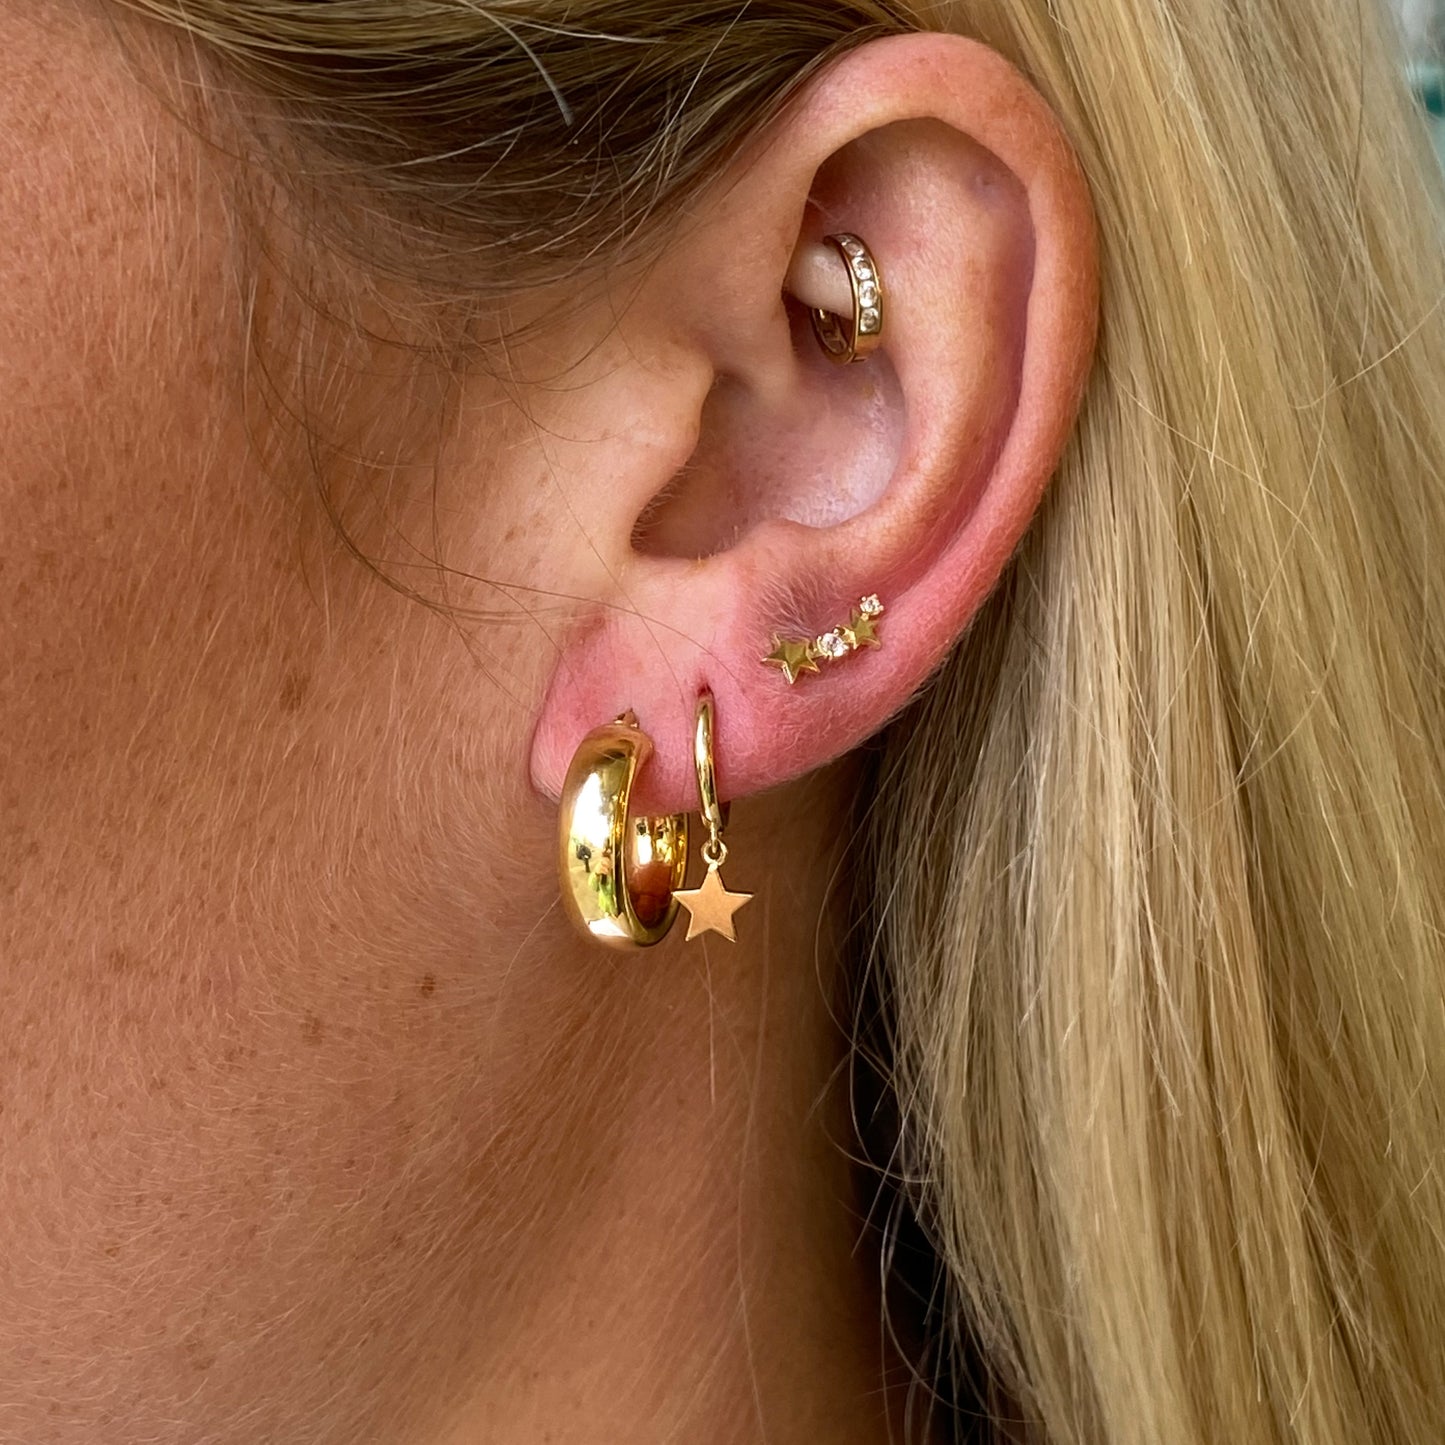 9ct Gold Classic Chunky Hoop Earrings | 10mm - John Ross Jewellers